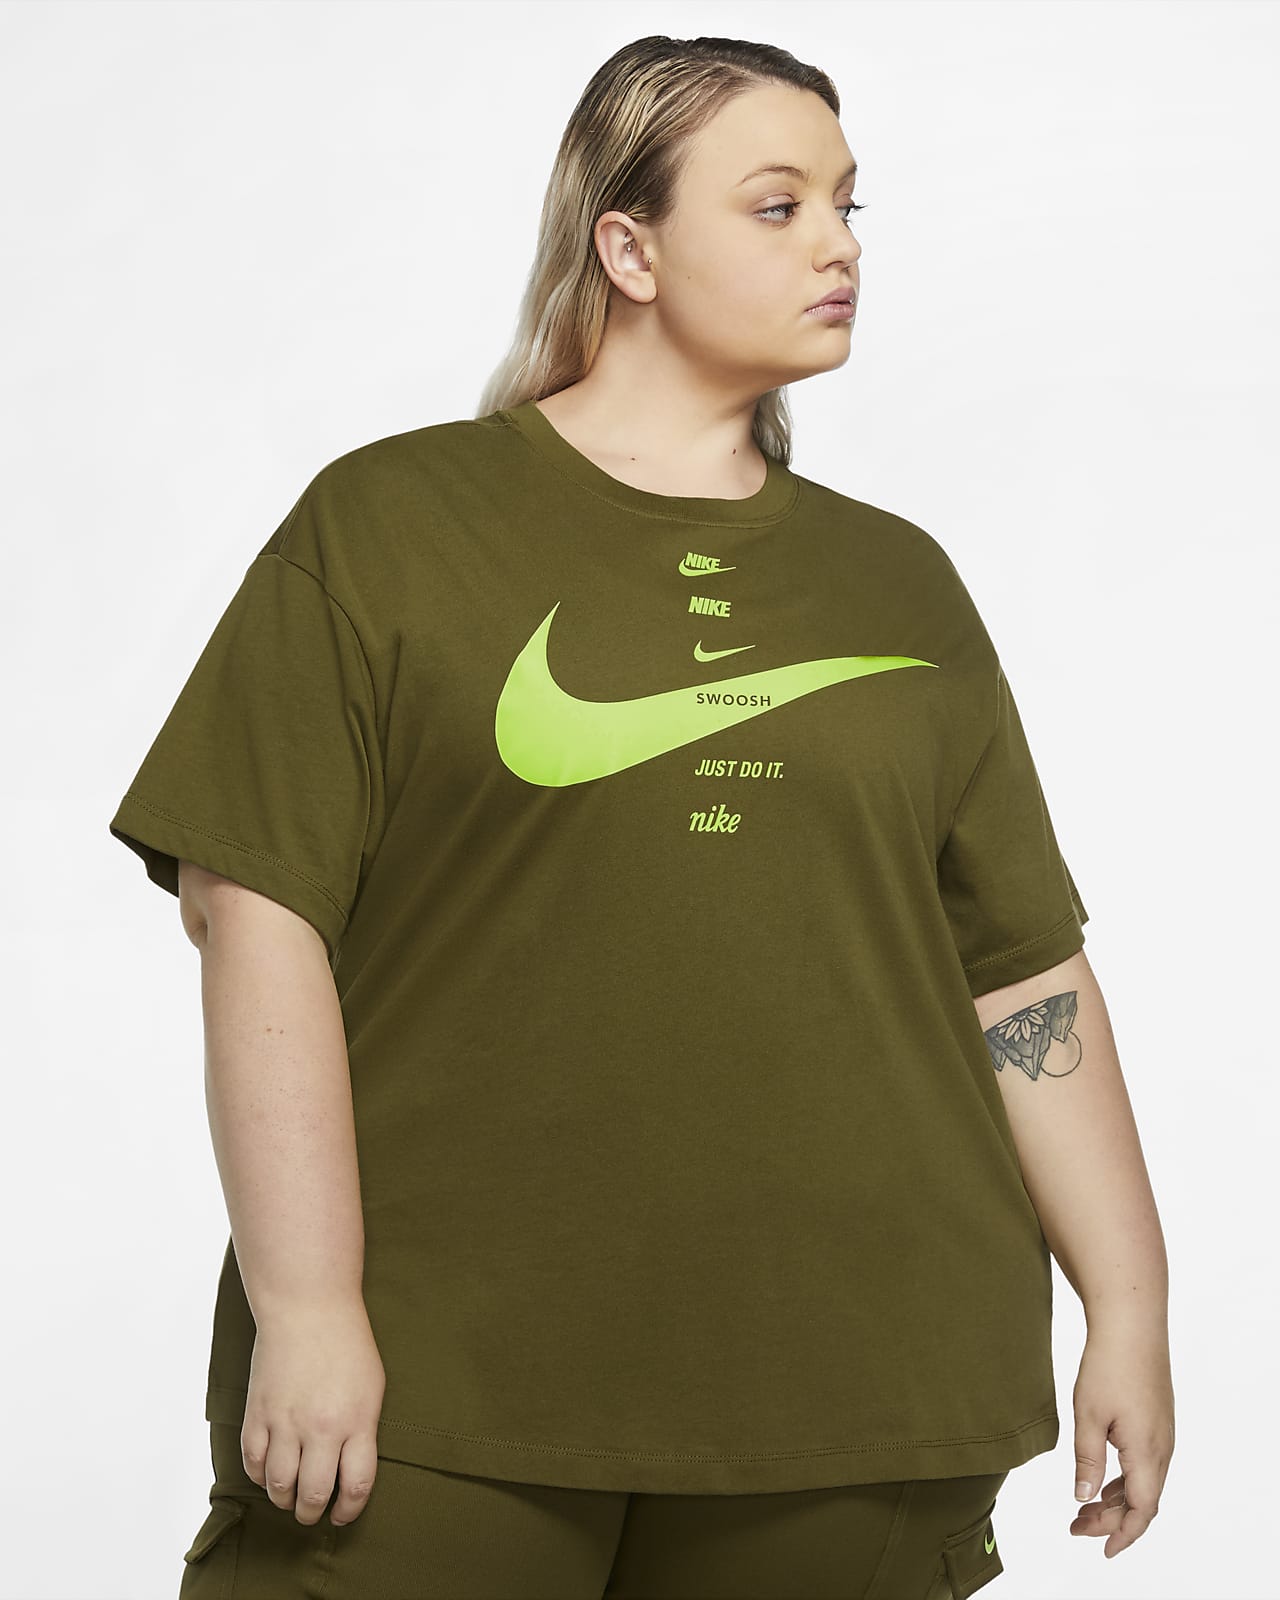 women's plus size nike t shirts